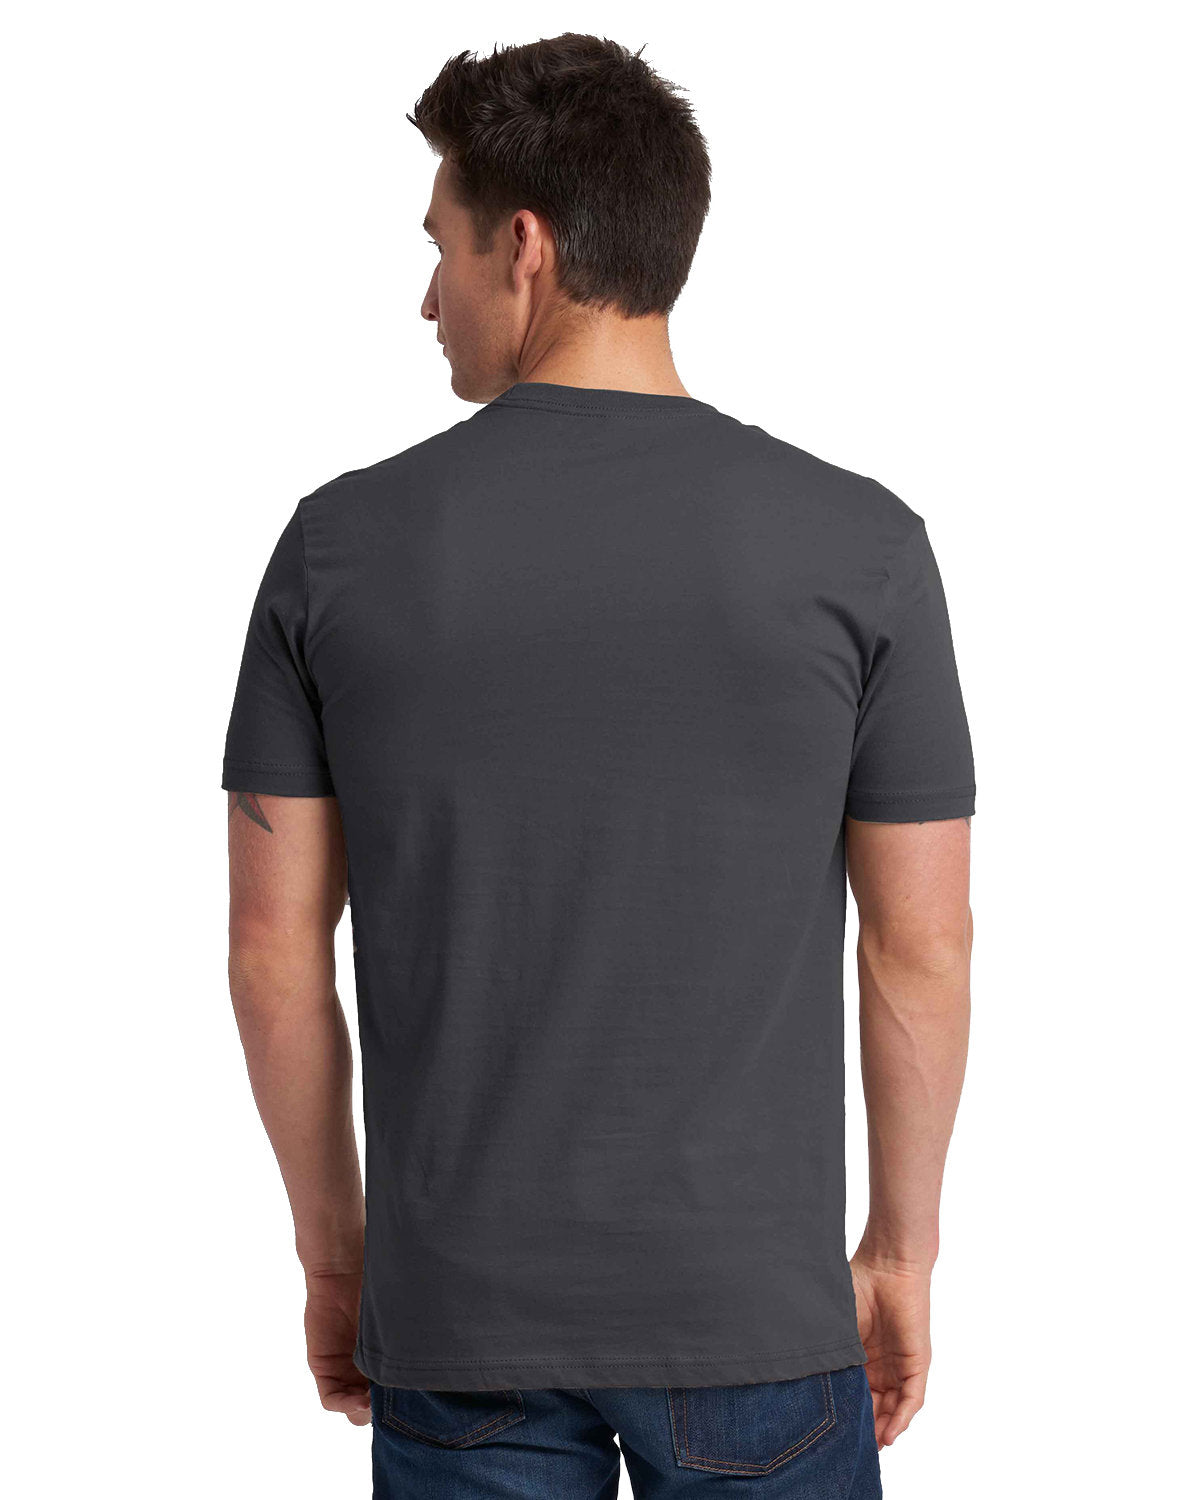 Next Level 3600 Unisex Cotton T-Shirt – Shirts In Bulk